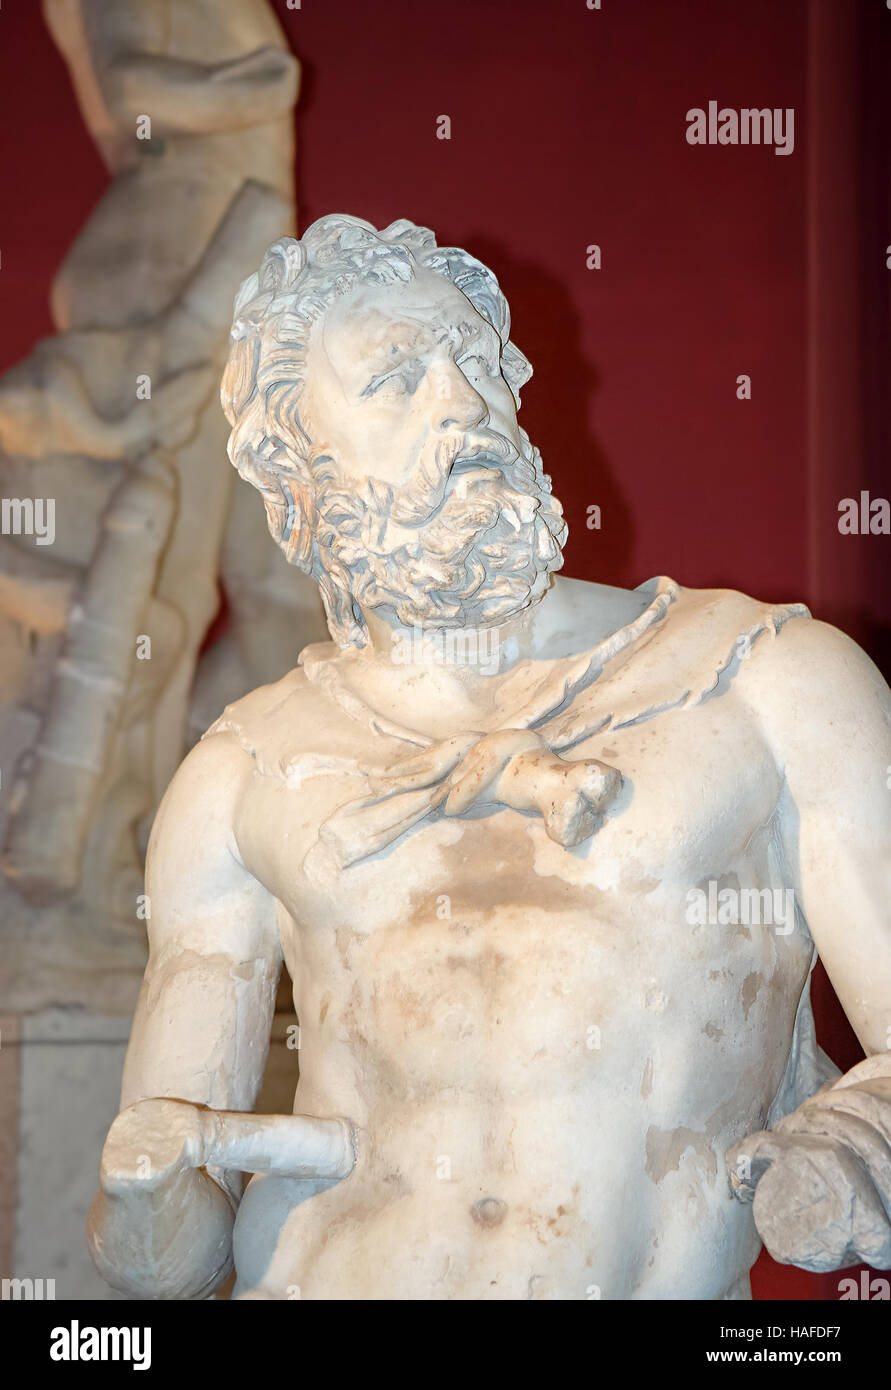 26.09.2009 statua romana di statua in marmo. Museo Jamahiriya, quadrato verde, Tripoli, Libia Foto Stock